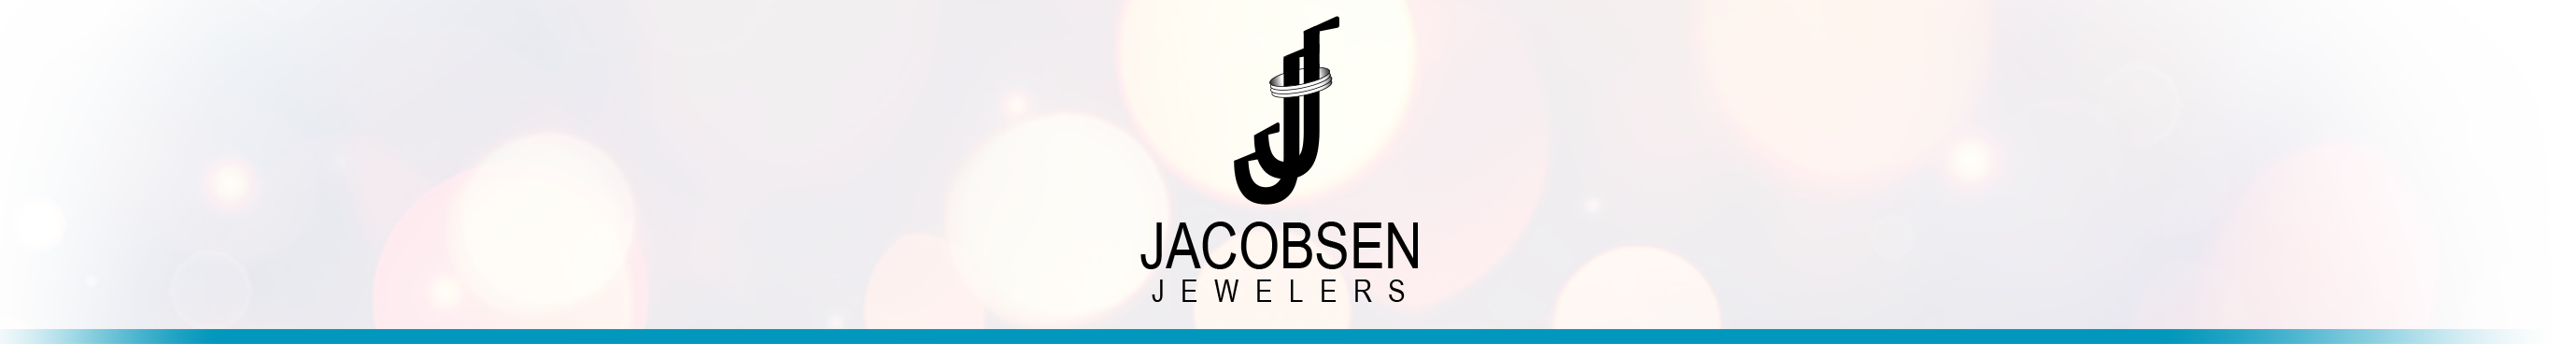 Jacobsen Jewelers Logo